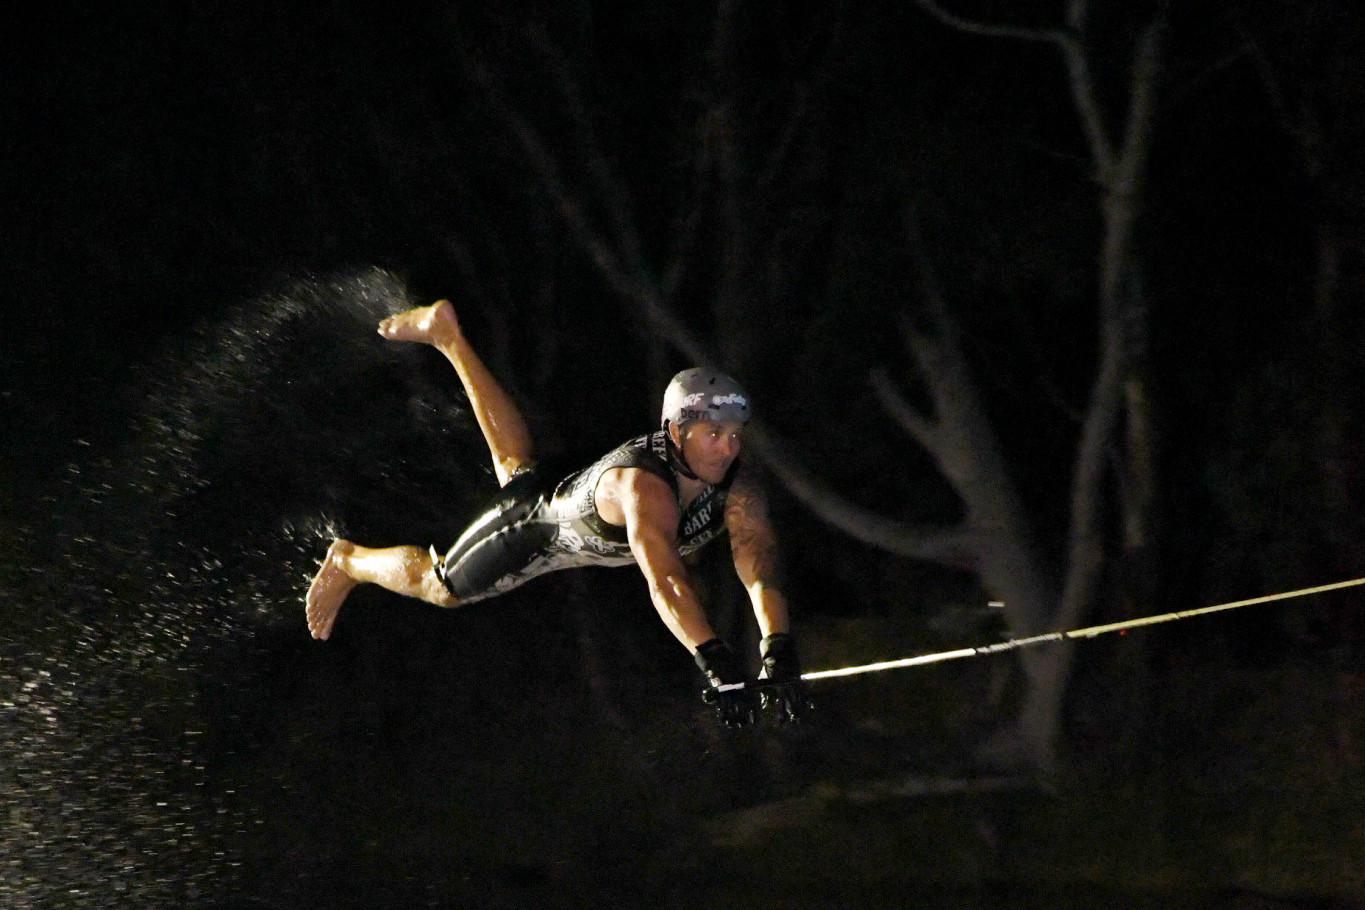 Luke Van Den Heuvel with his final jump of the night. Photo: David Ward